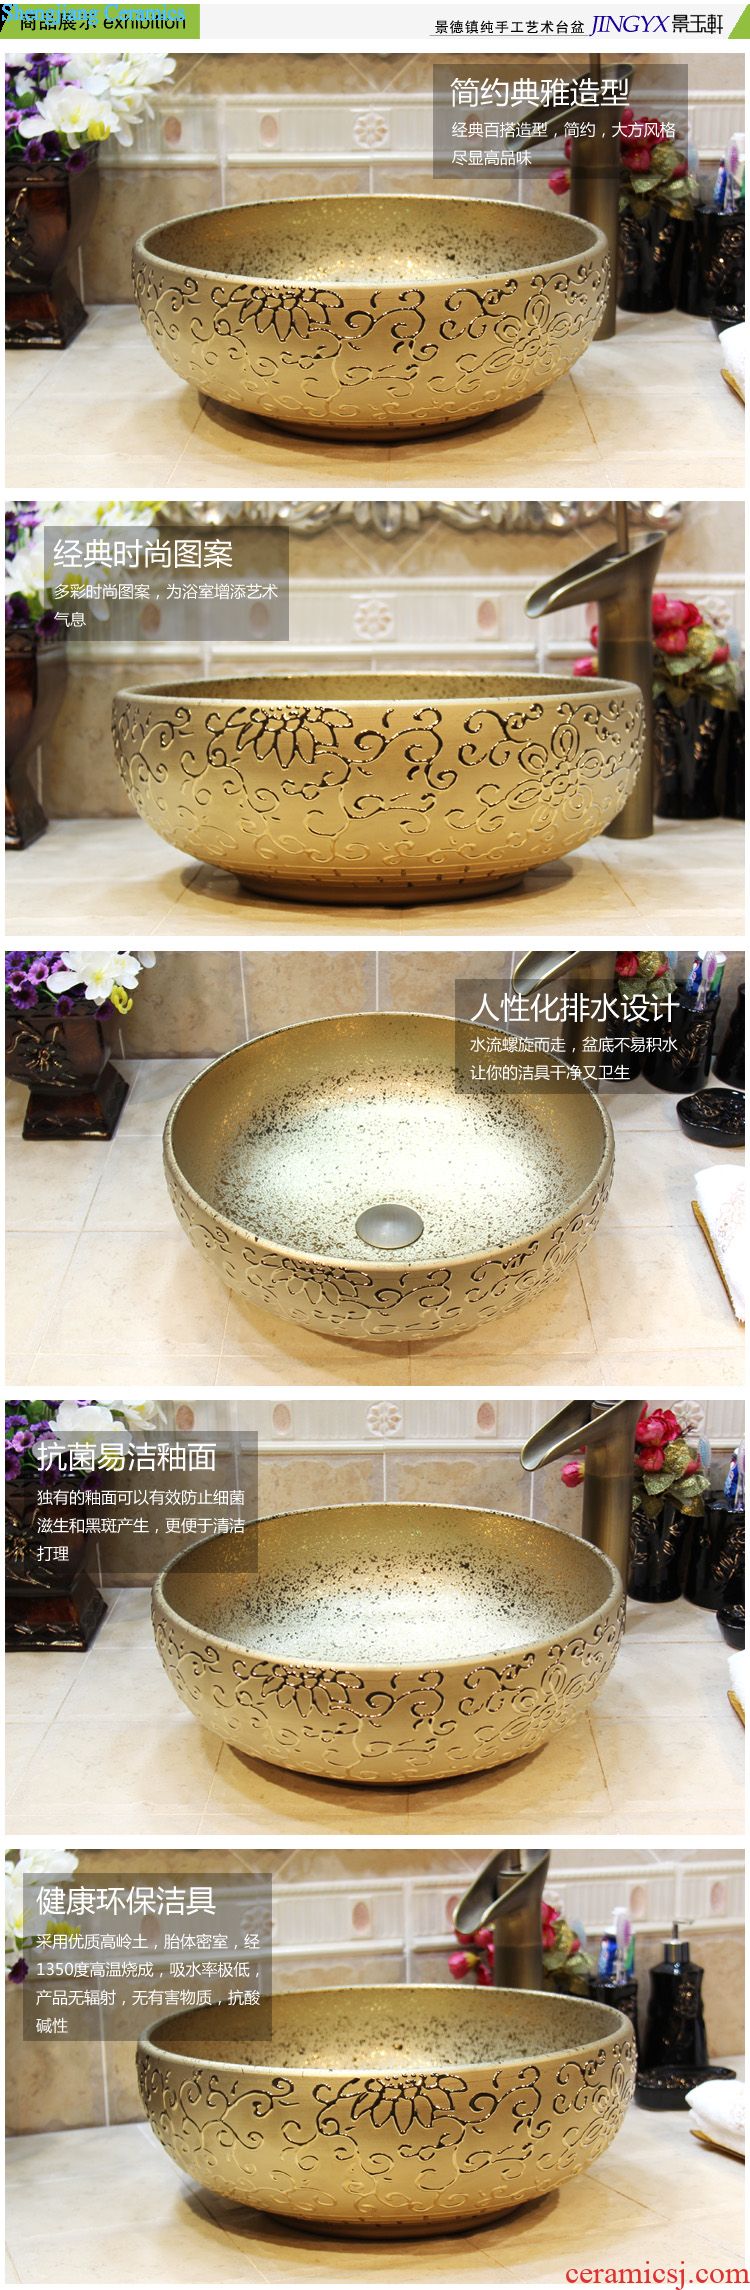 Jingdezhen ceramic art mop pool water-saving conjoined mop pool pool sewage pool under the mop bucket